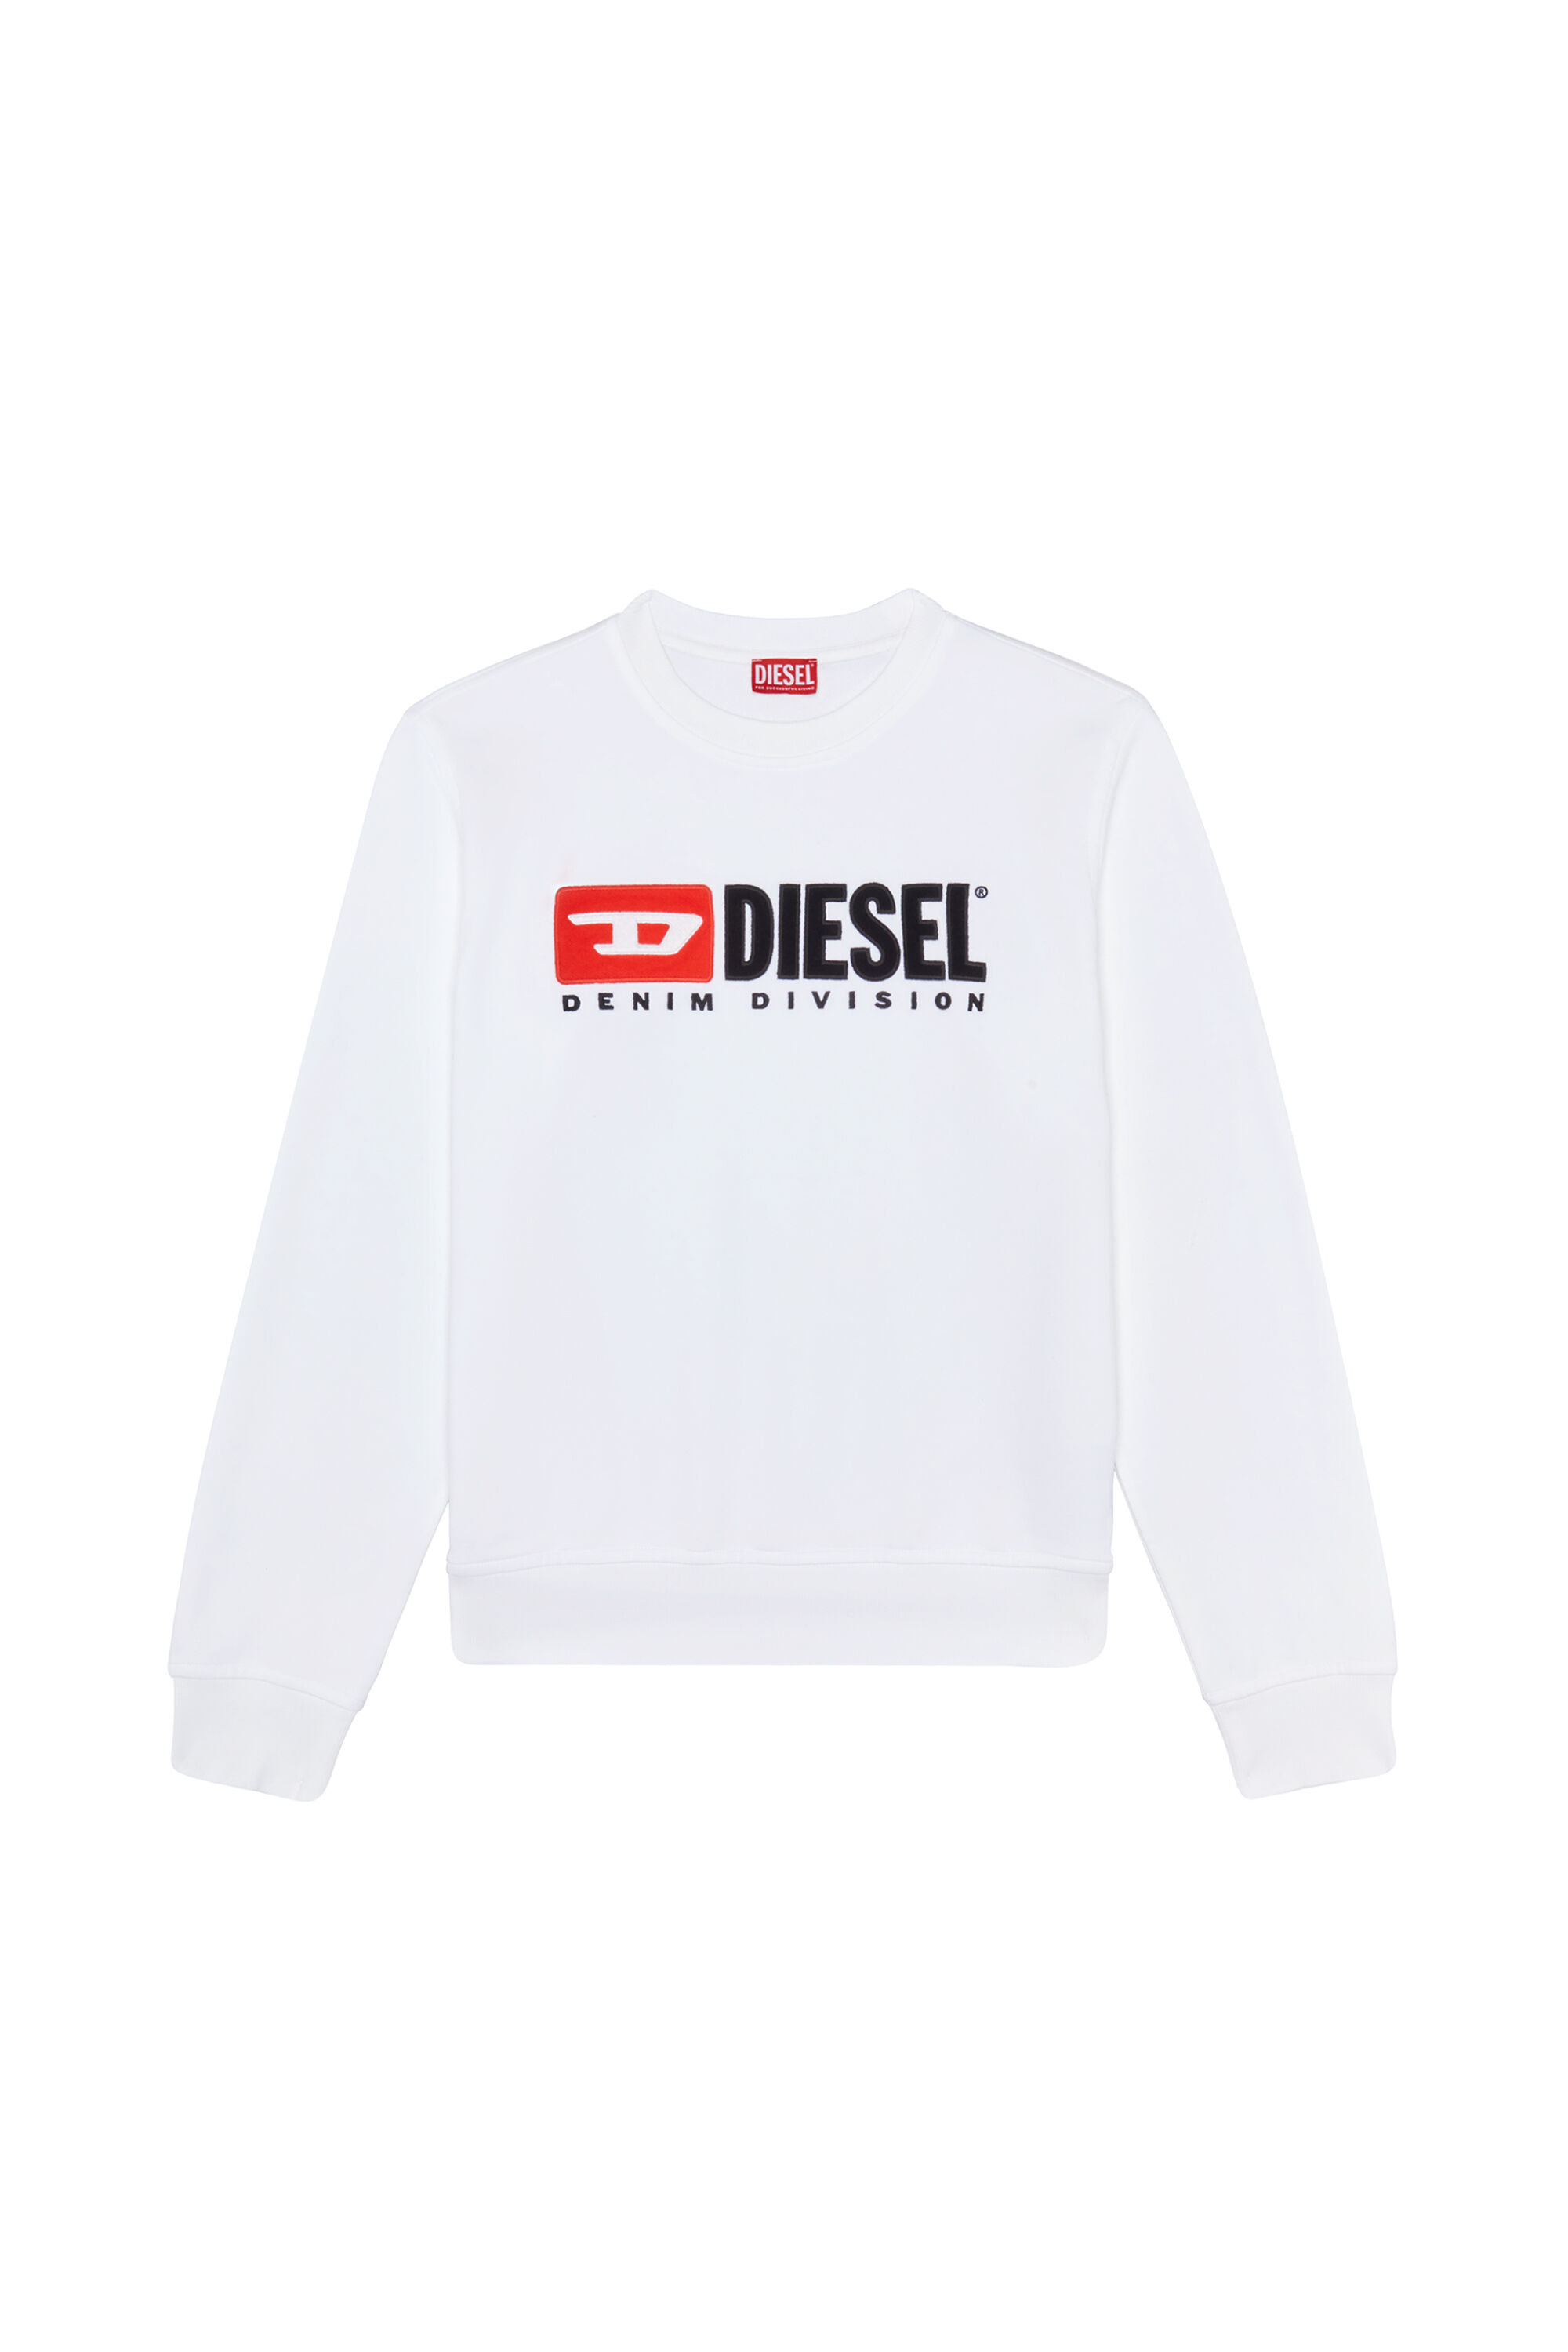 Diesel - S-GINN-DIV, Blanc - Image 2